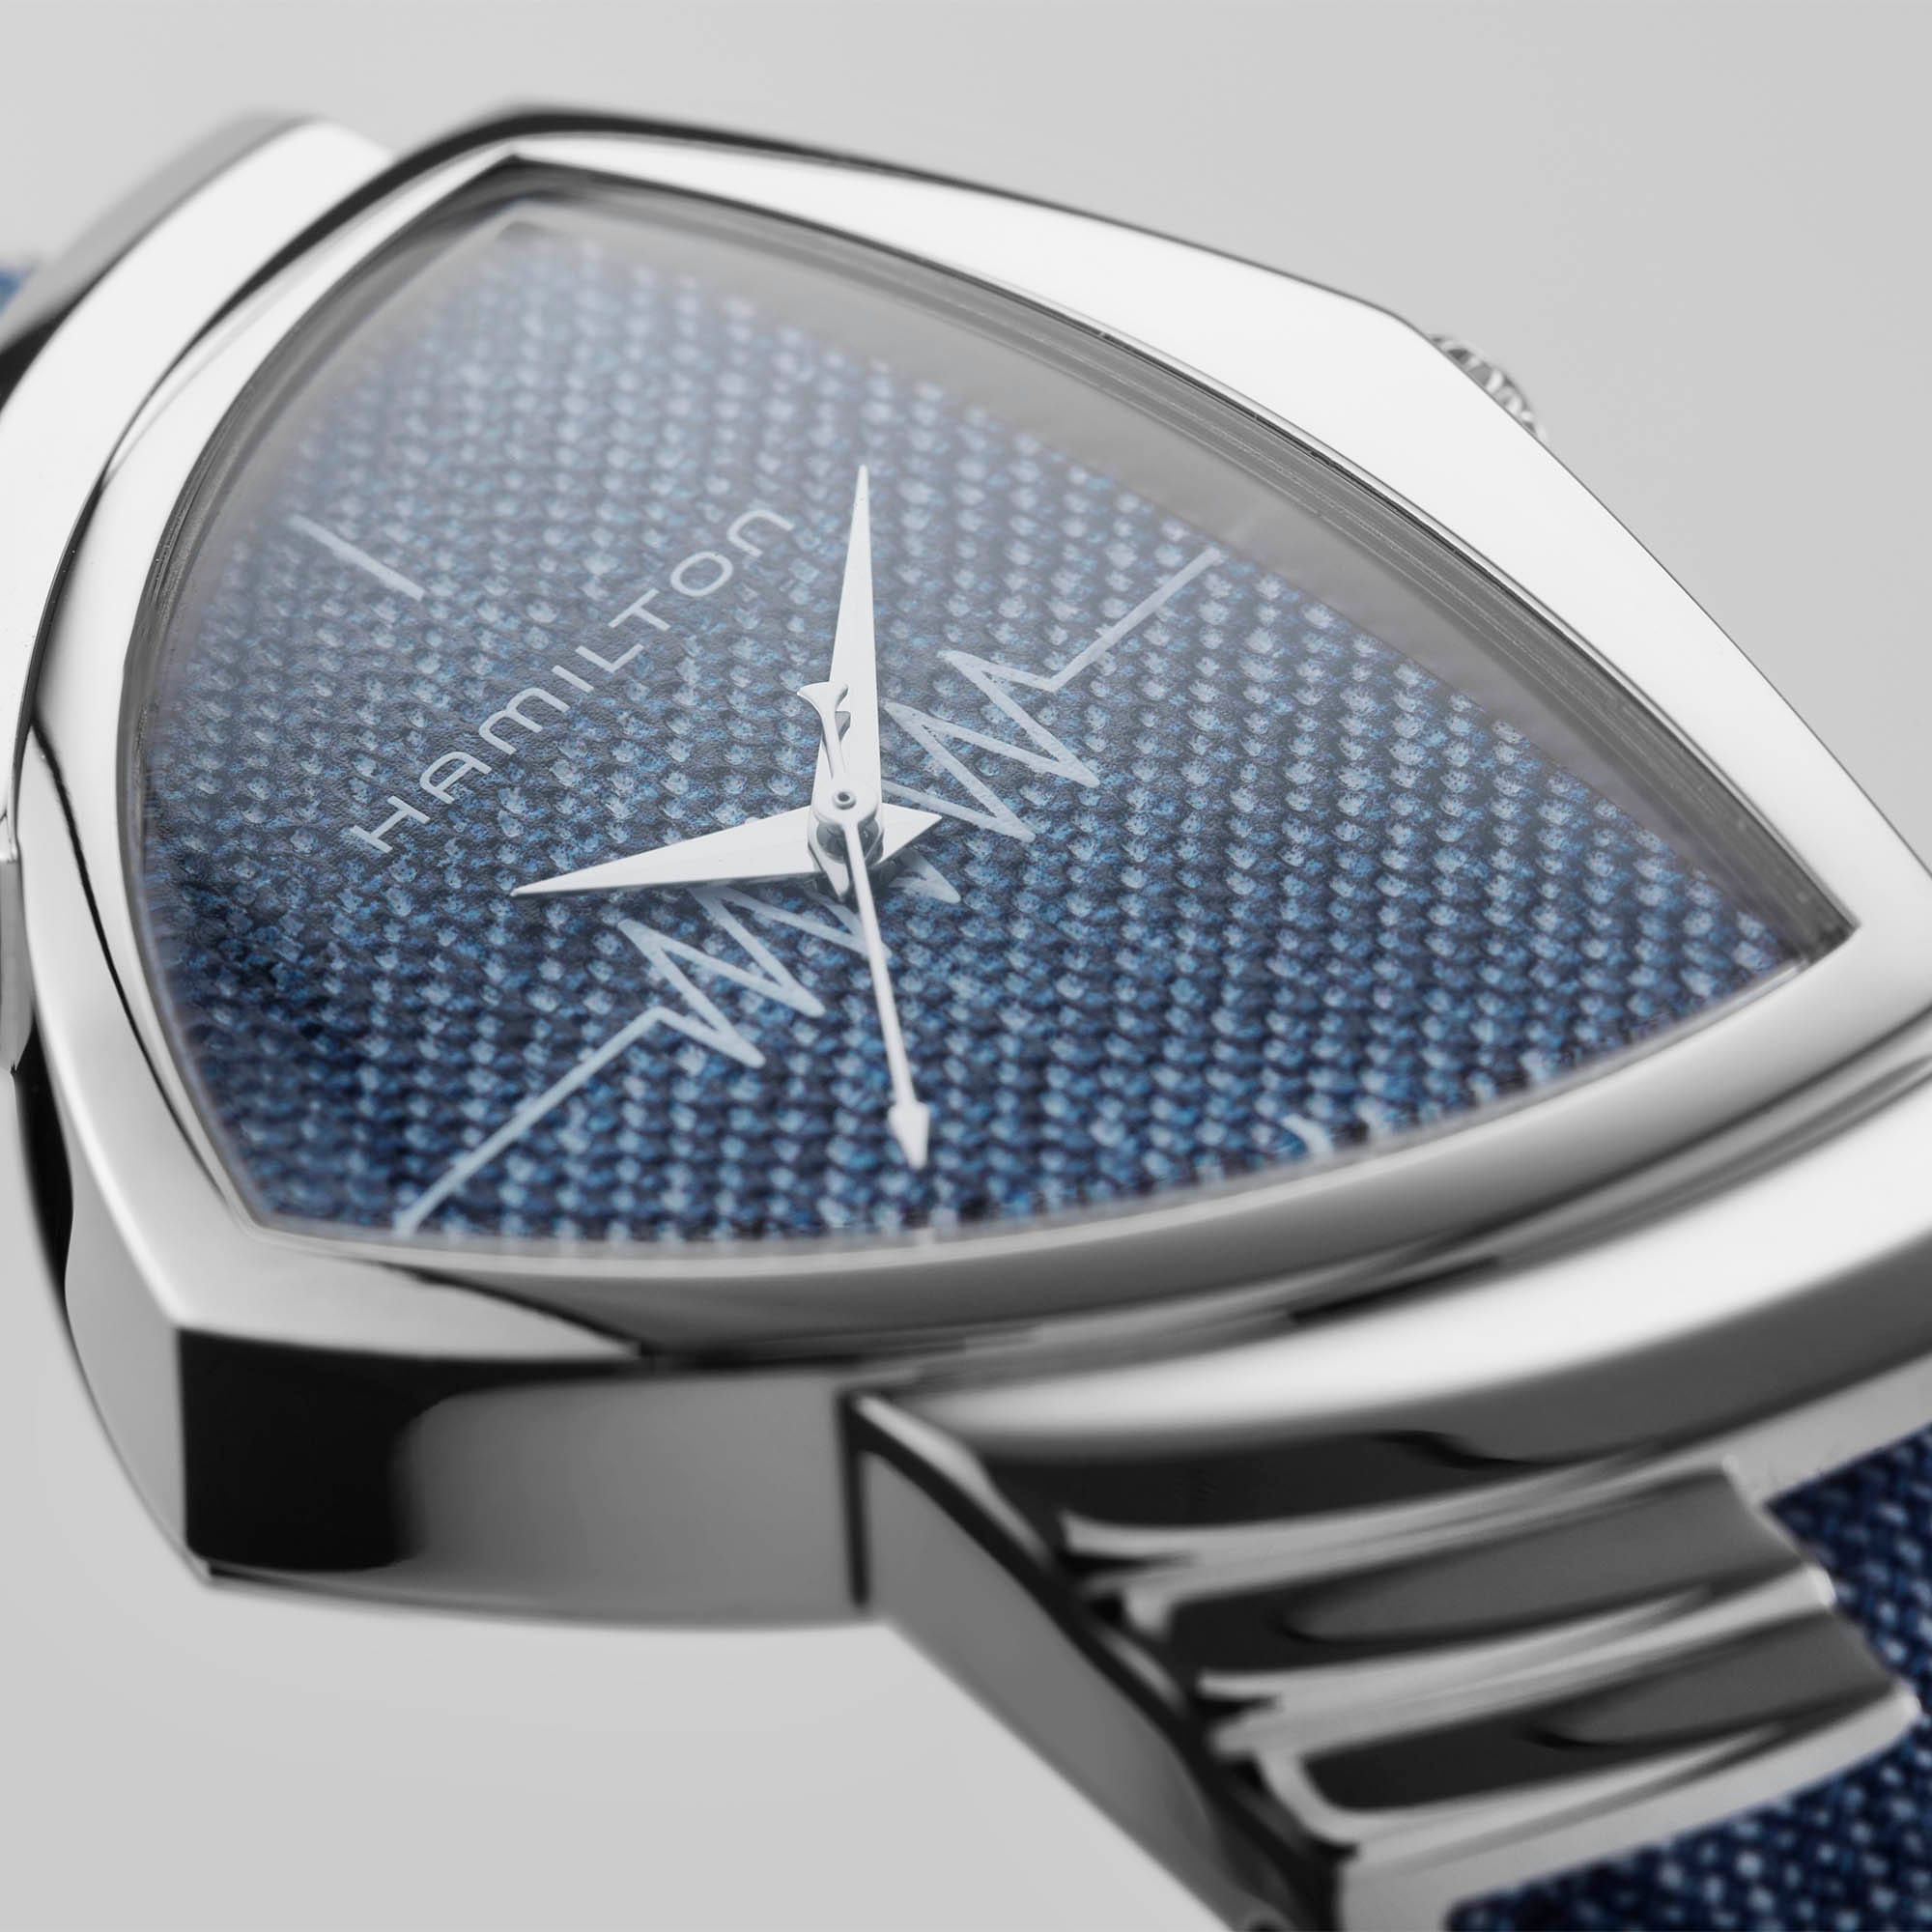 Ventura Quartz Watch - Blue Dial - H24411941 | Hamilton Watch